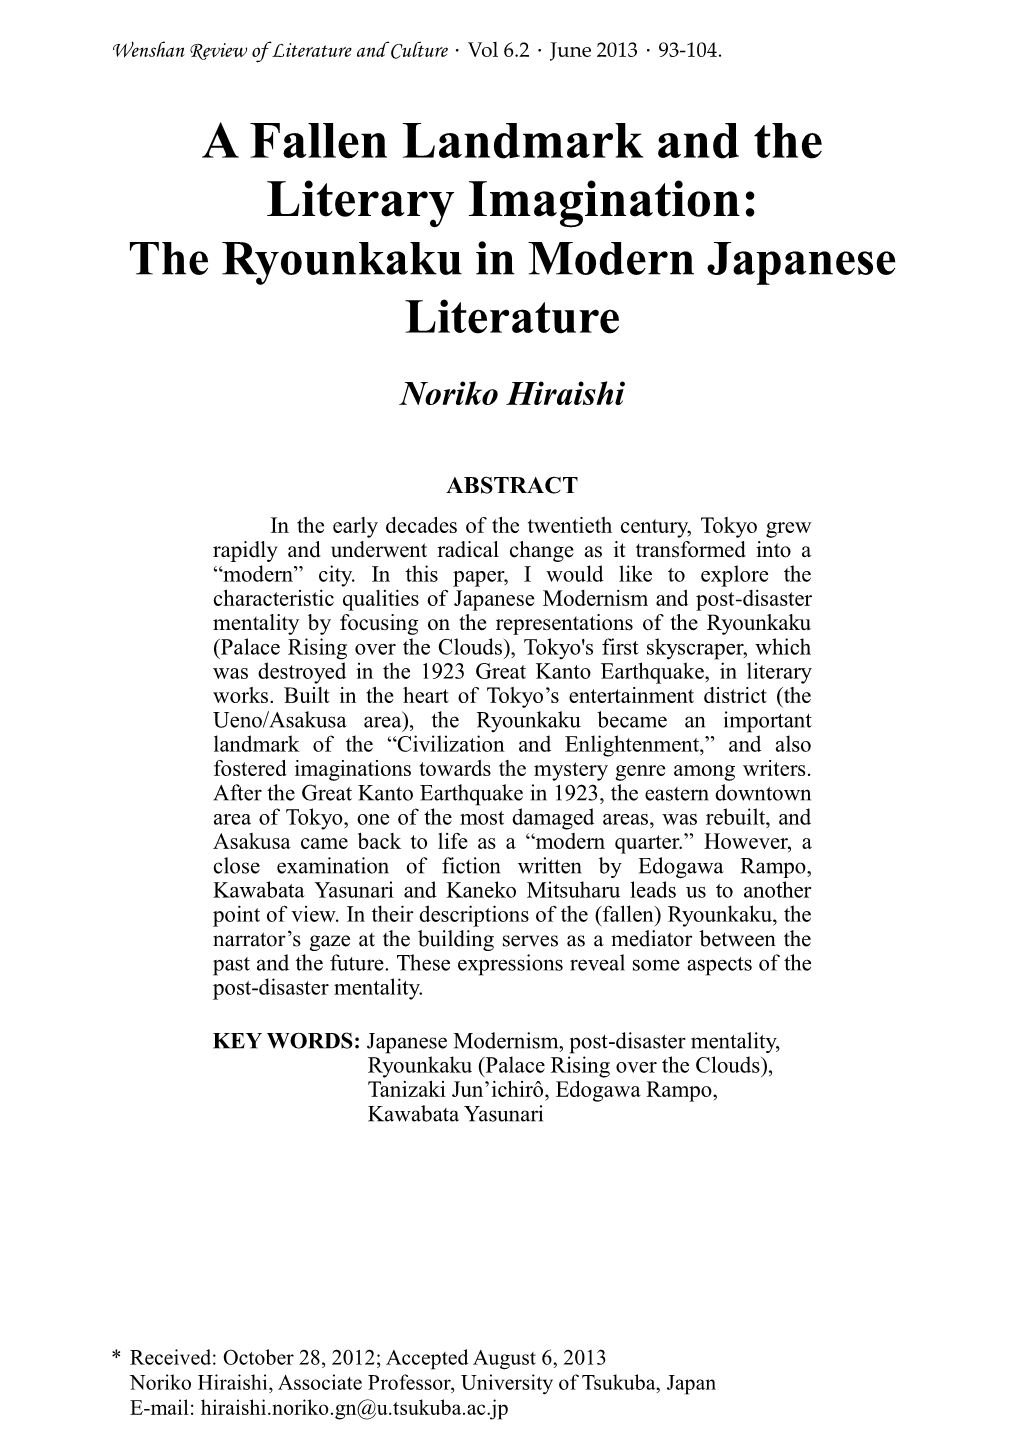 A Fallen Landmark and the Literary Imagination: the Ryounkaku in Modern Japanese Literature